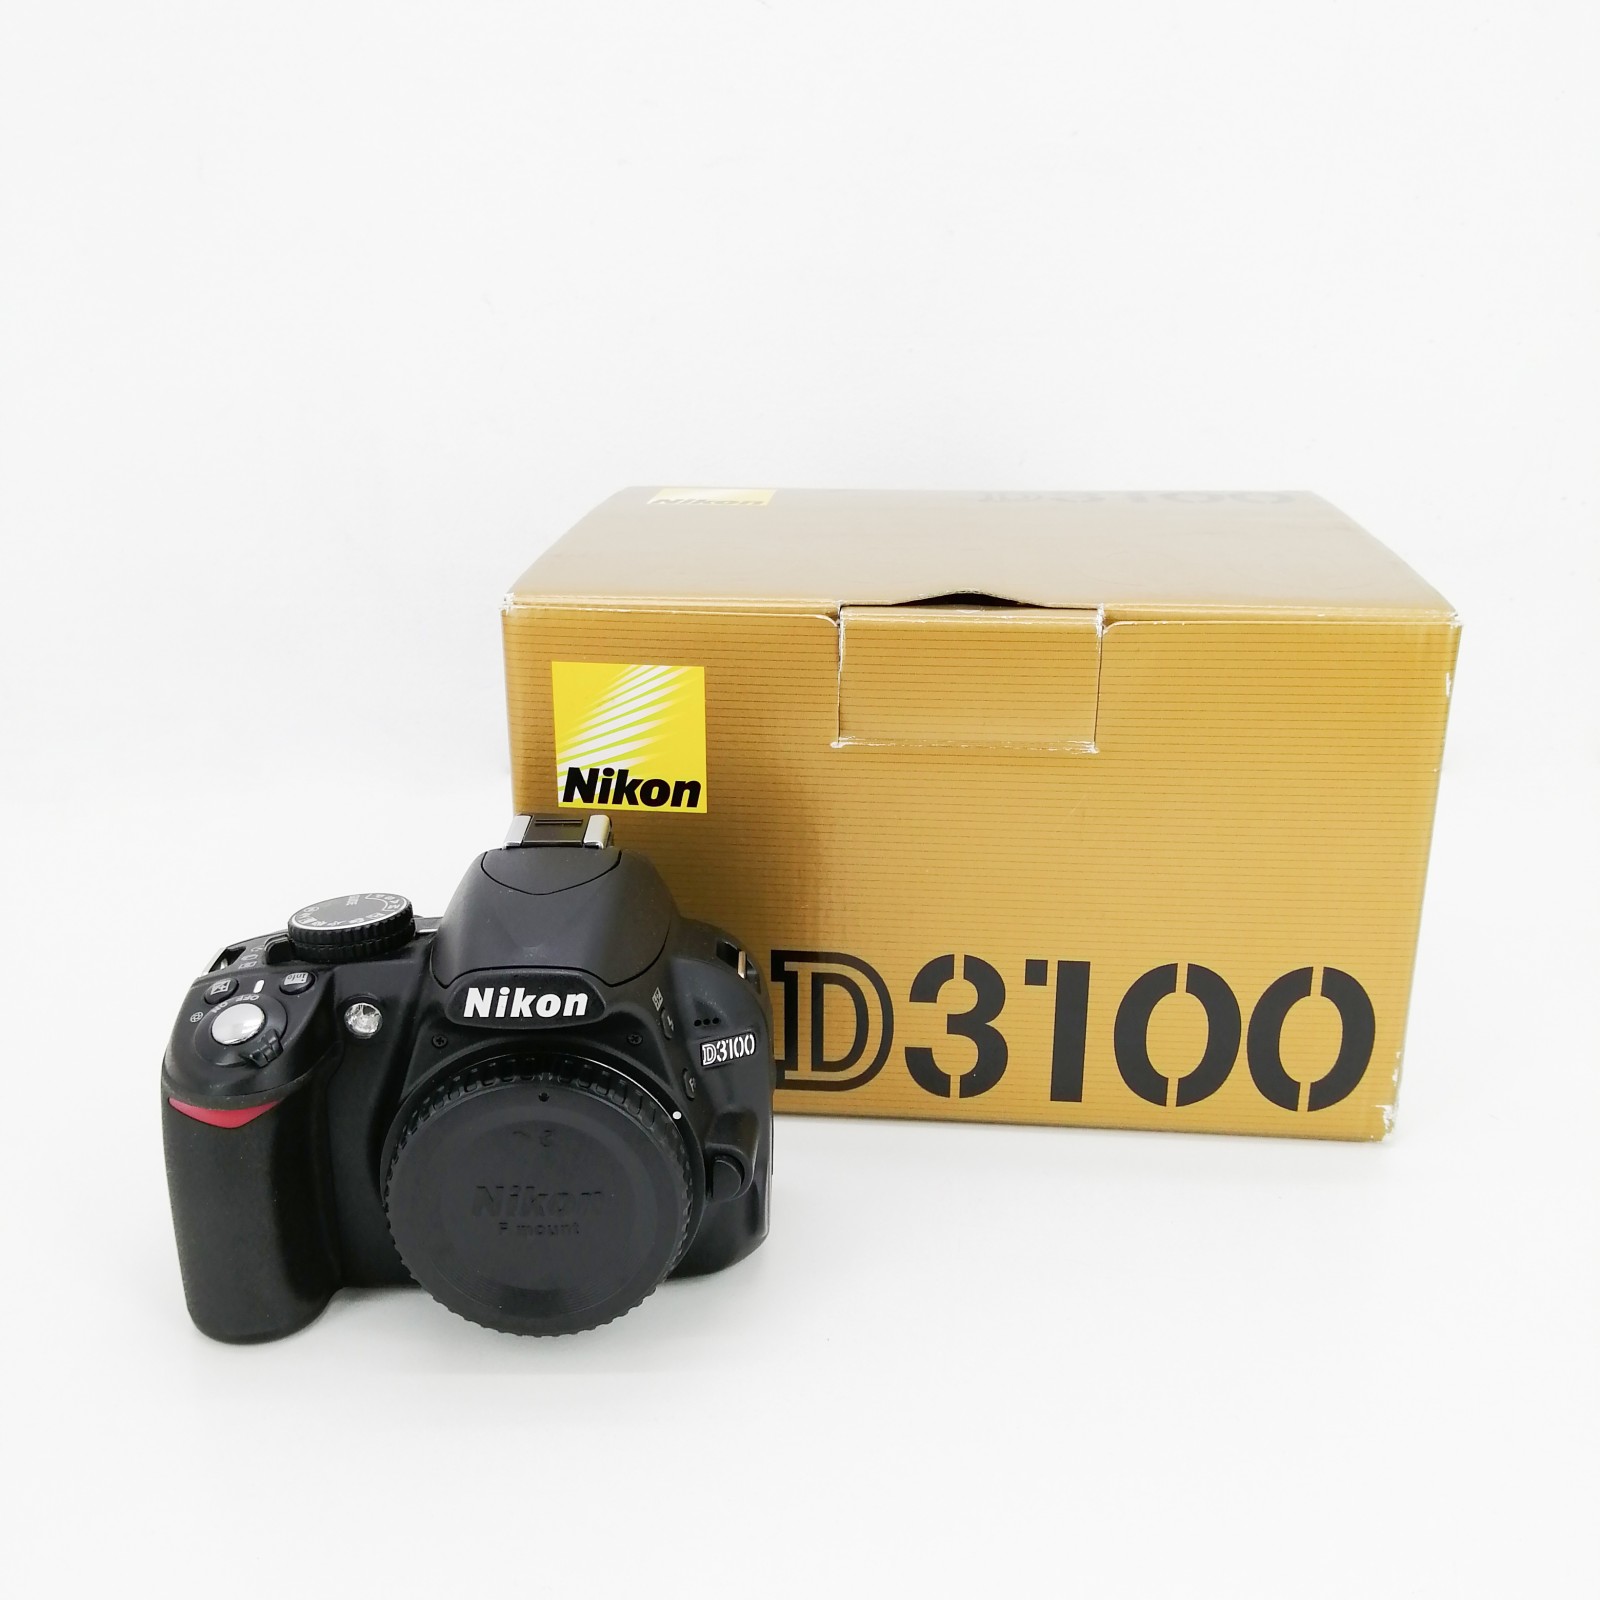 Cámara réflex Nikon D3100 Solo cuerpo , pantalla de 3